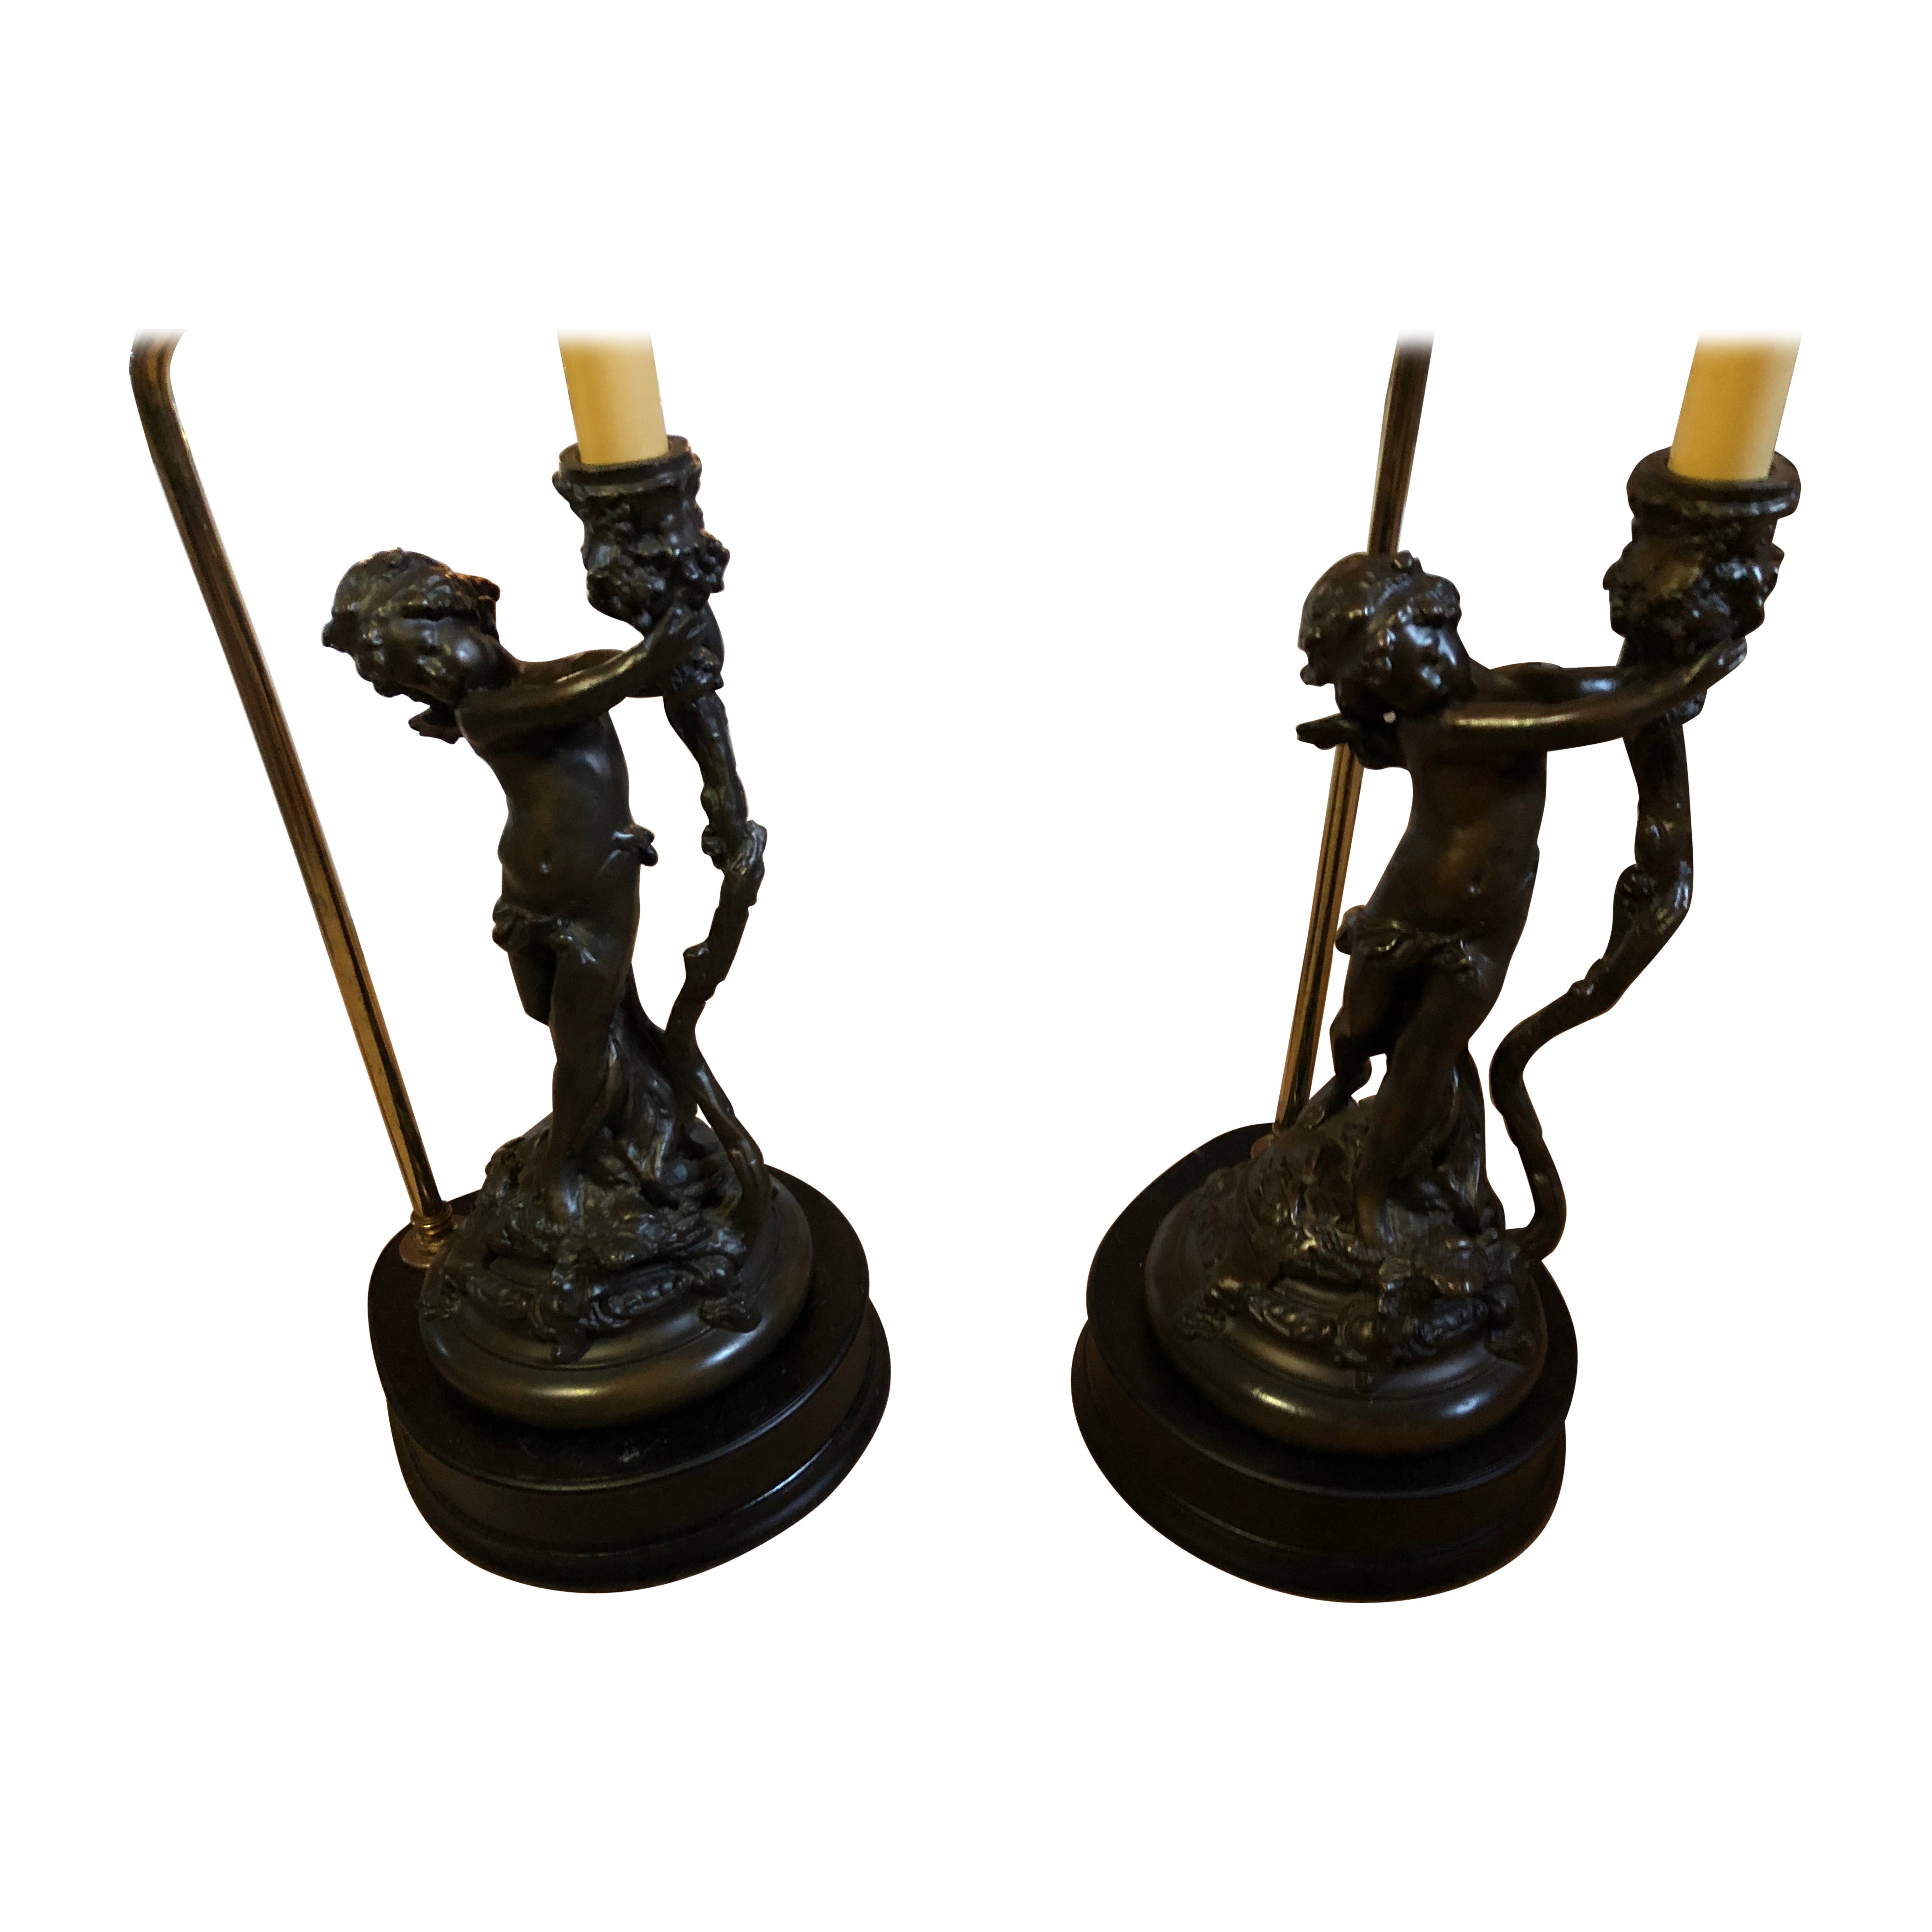 Skurrile Cherub-Tischlampen in Bronze-Finish, Paar